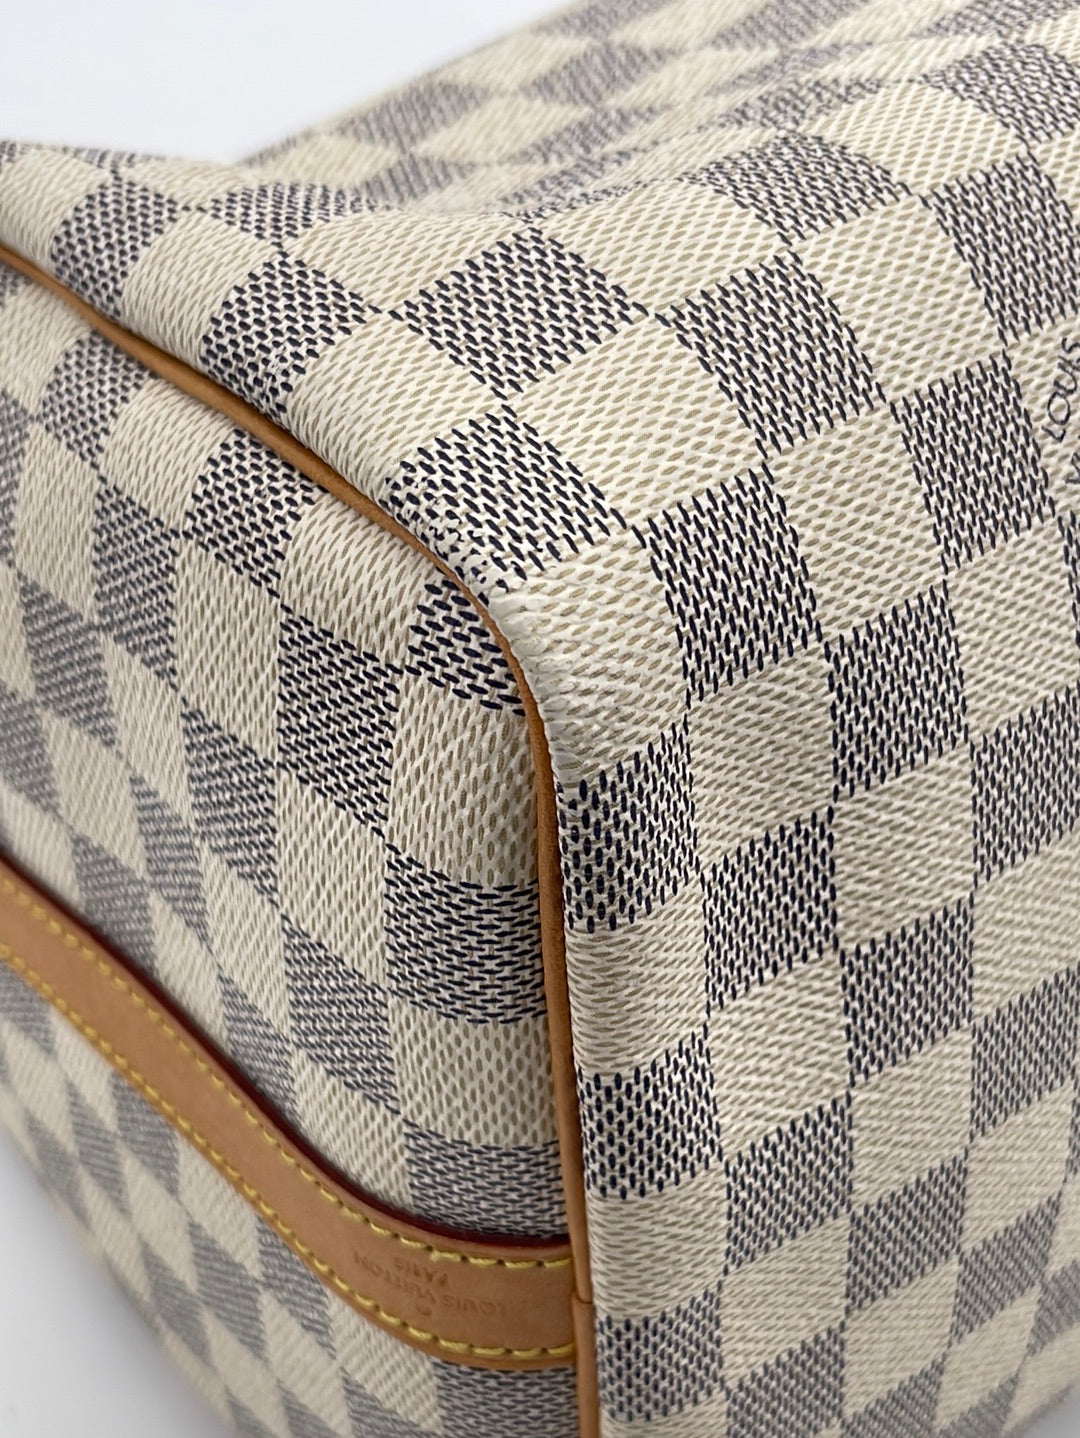 Louis Vuitton White Slides – The Bag Broker